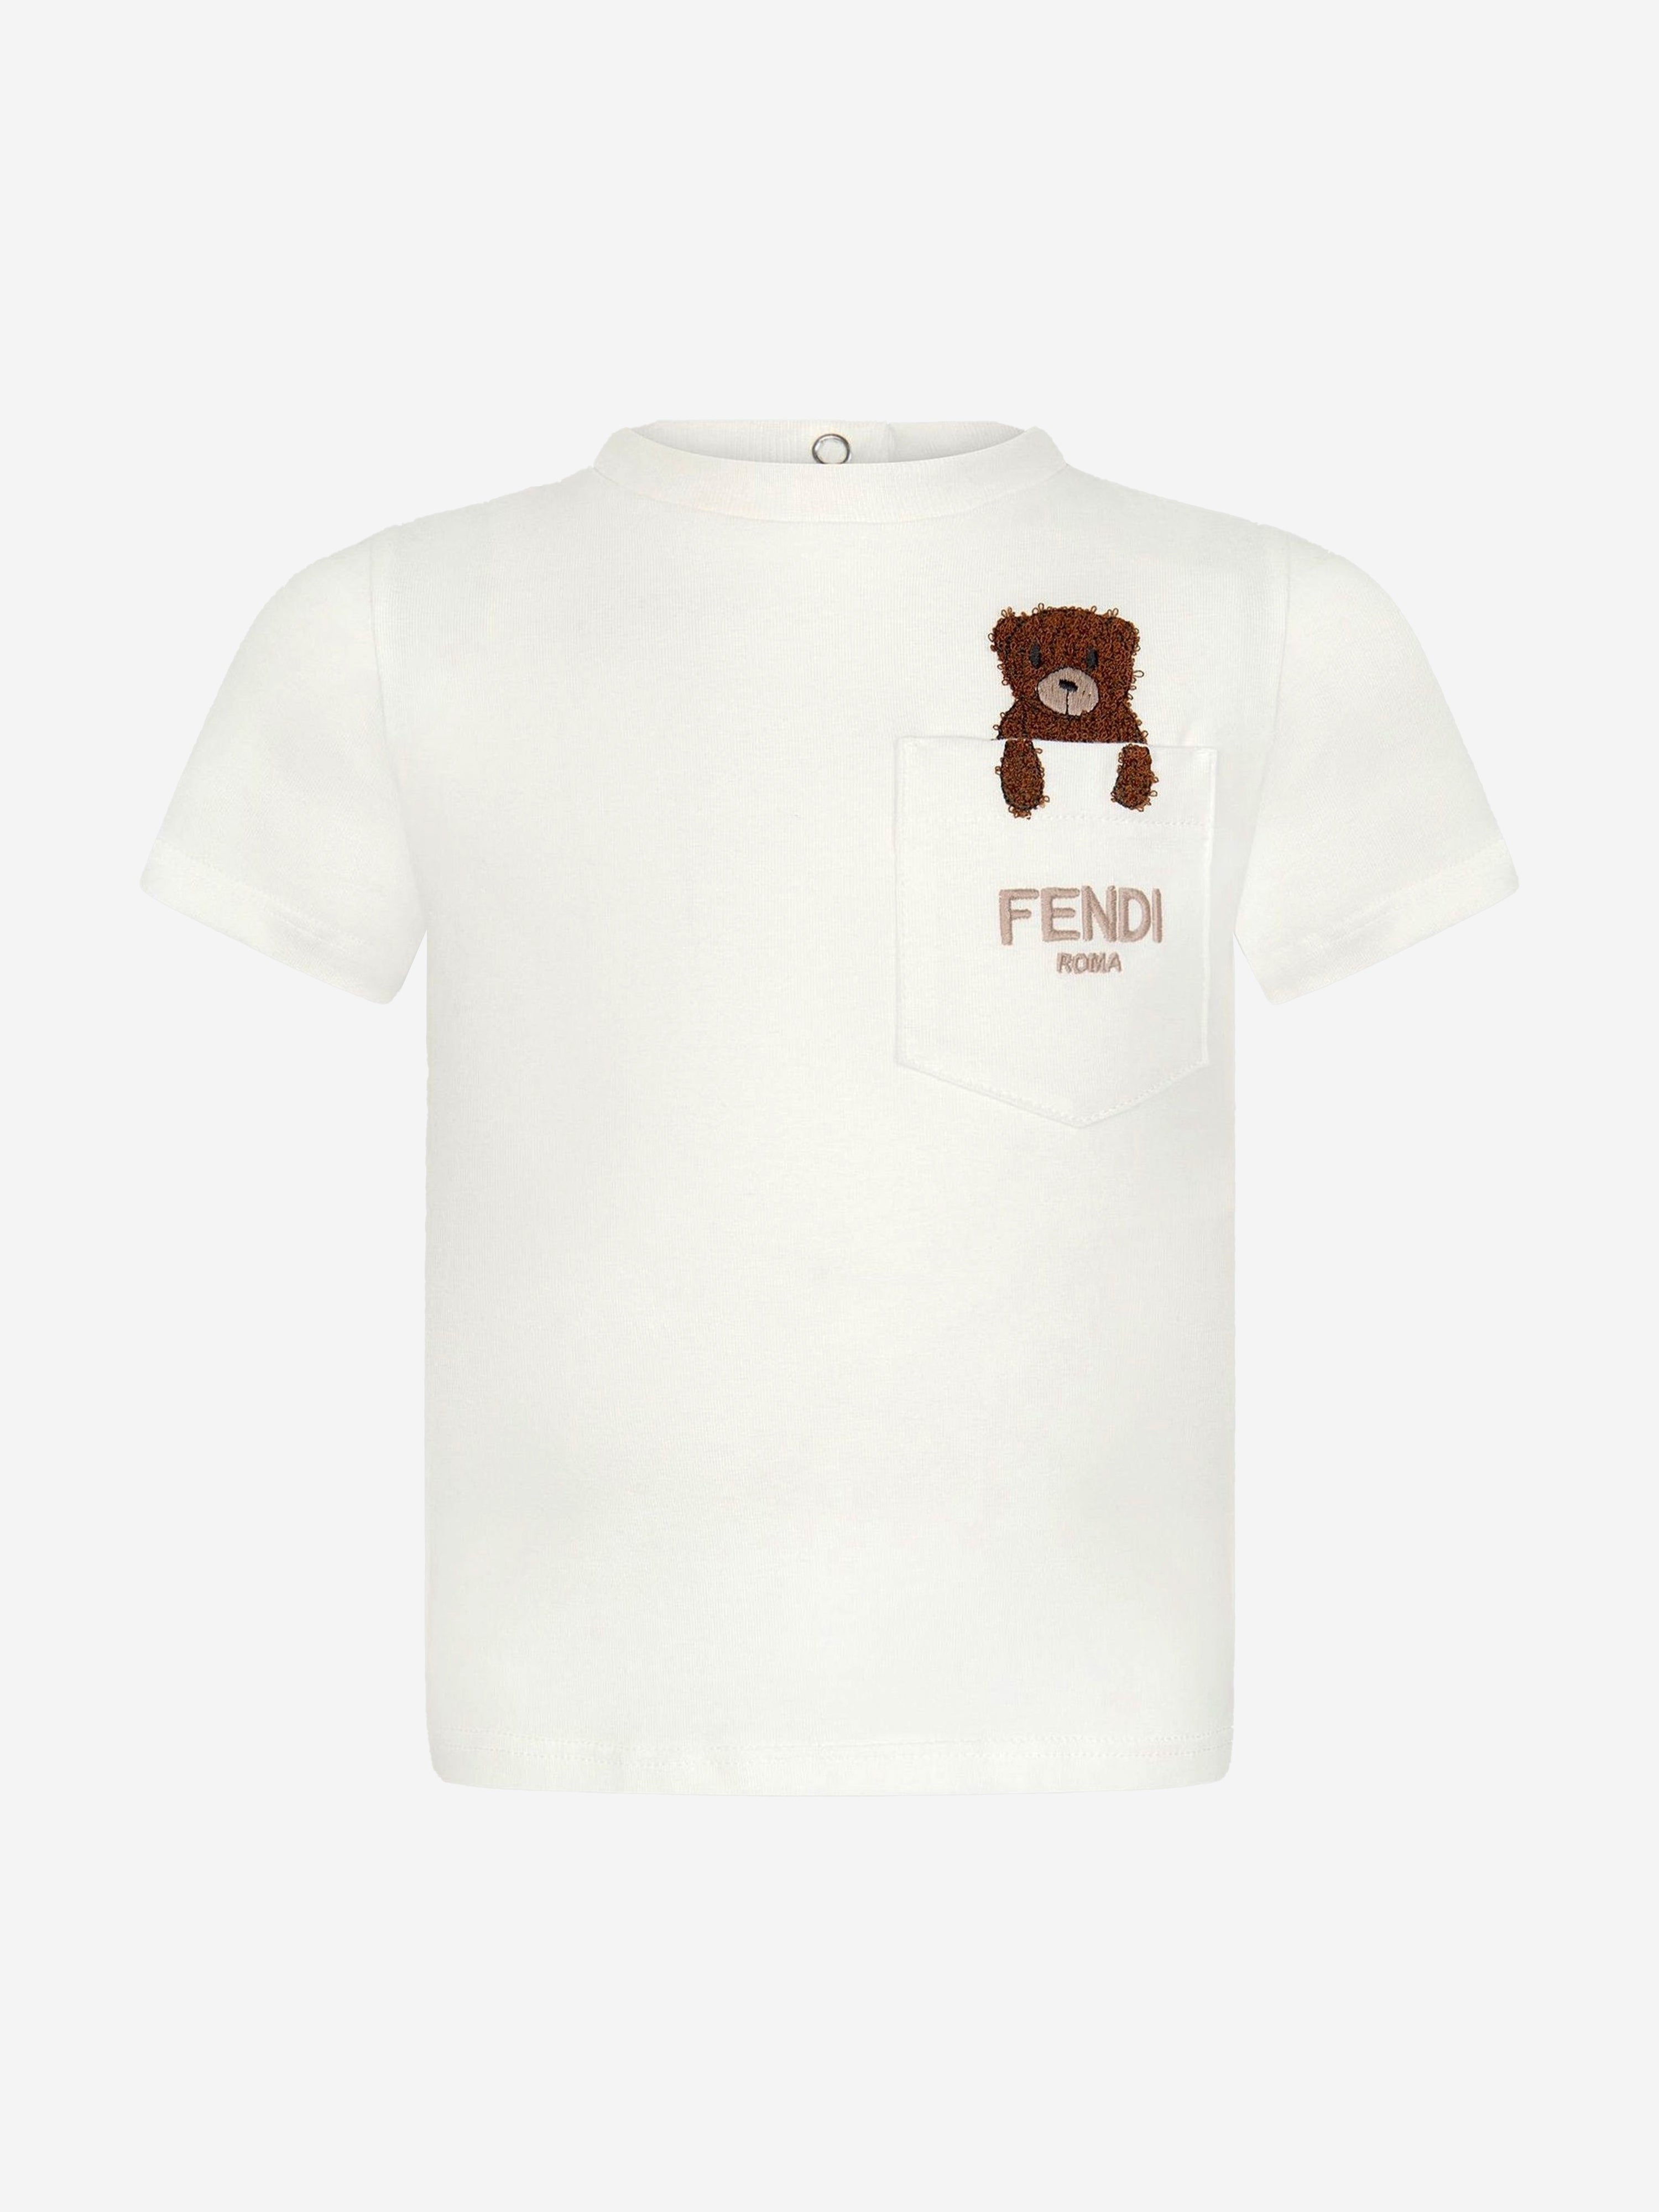 FENDI KIDS, T-shirt avec peluche